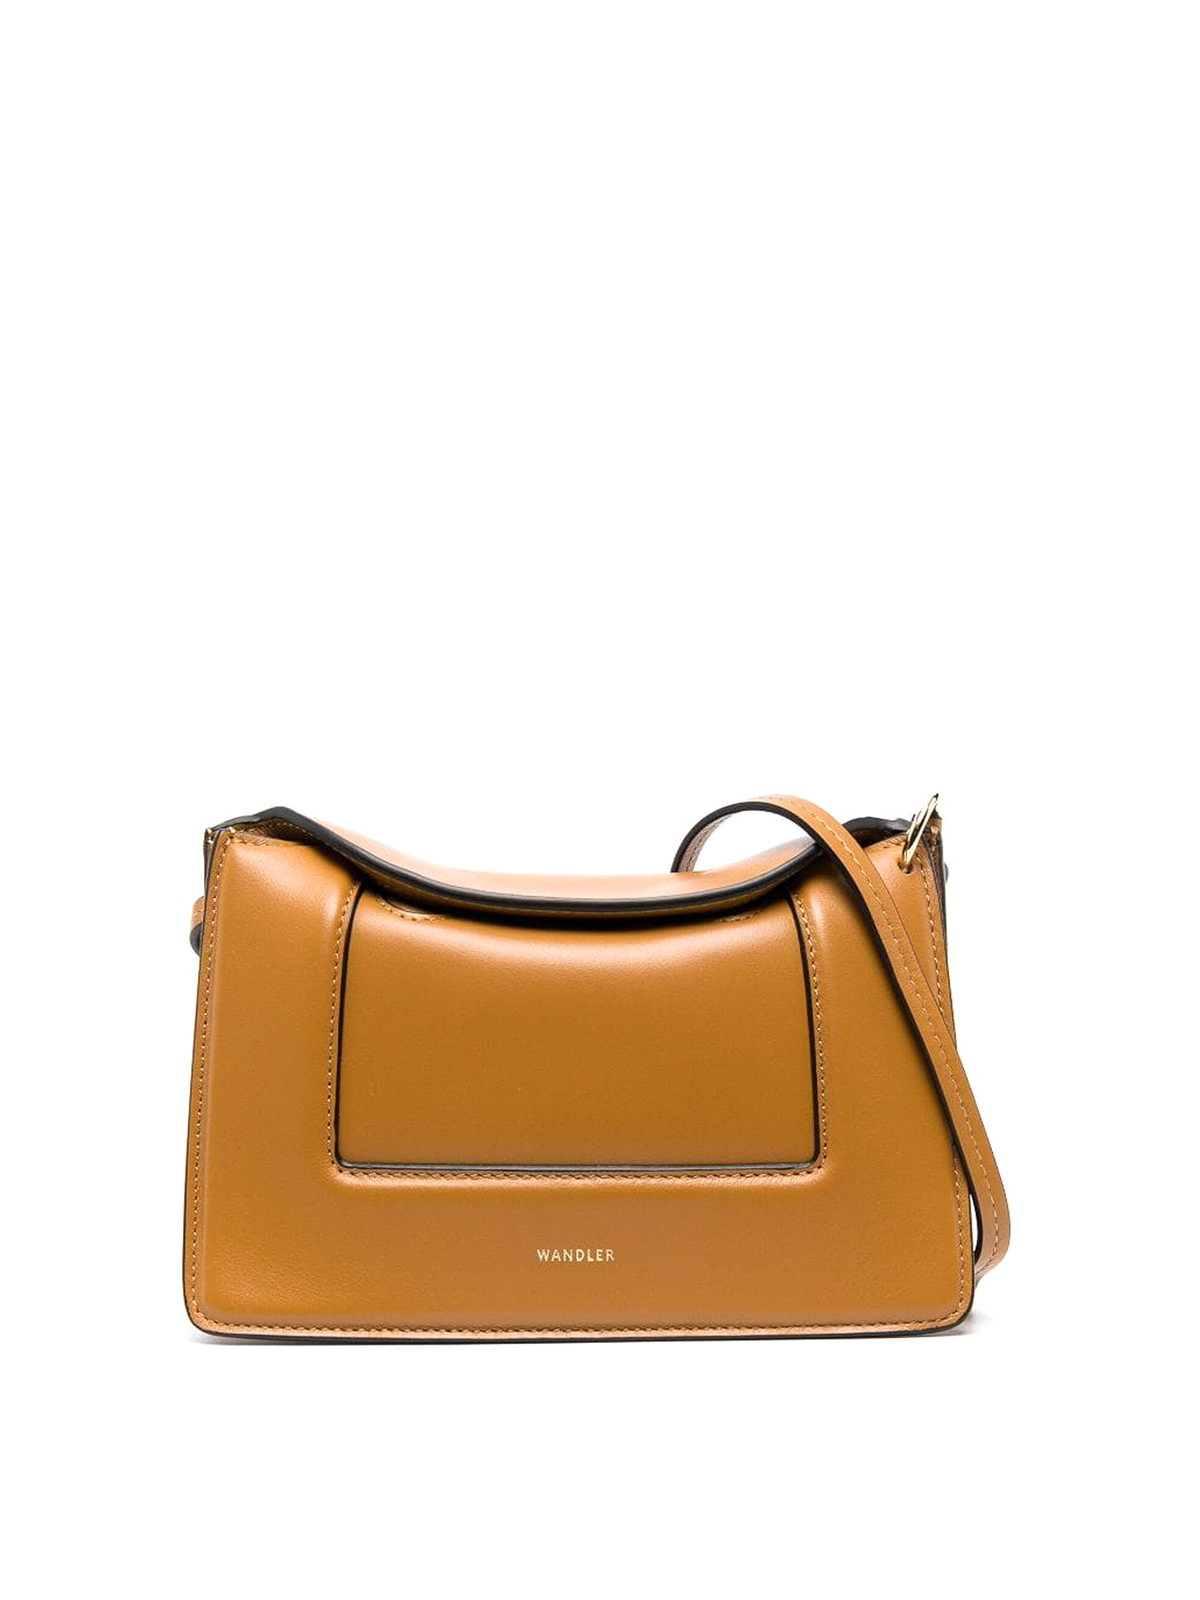 Wandler Penelope Micro Leather Shoulder Bag